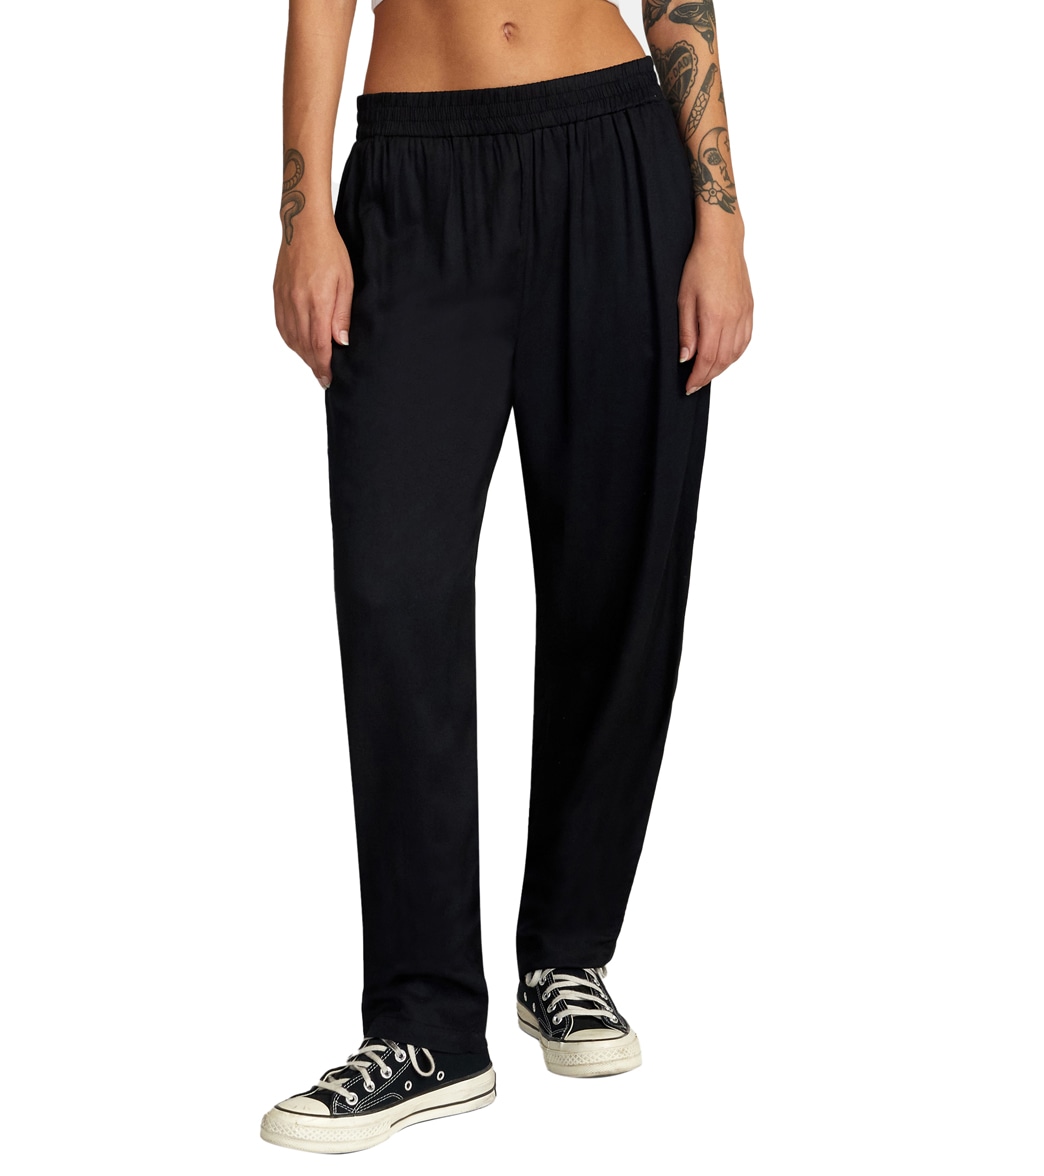 Rvca Women's New Yume Pants - Pirate Black Medium - Swimoutlet.com